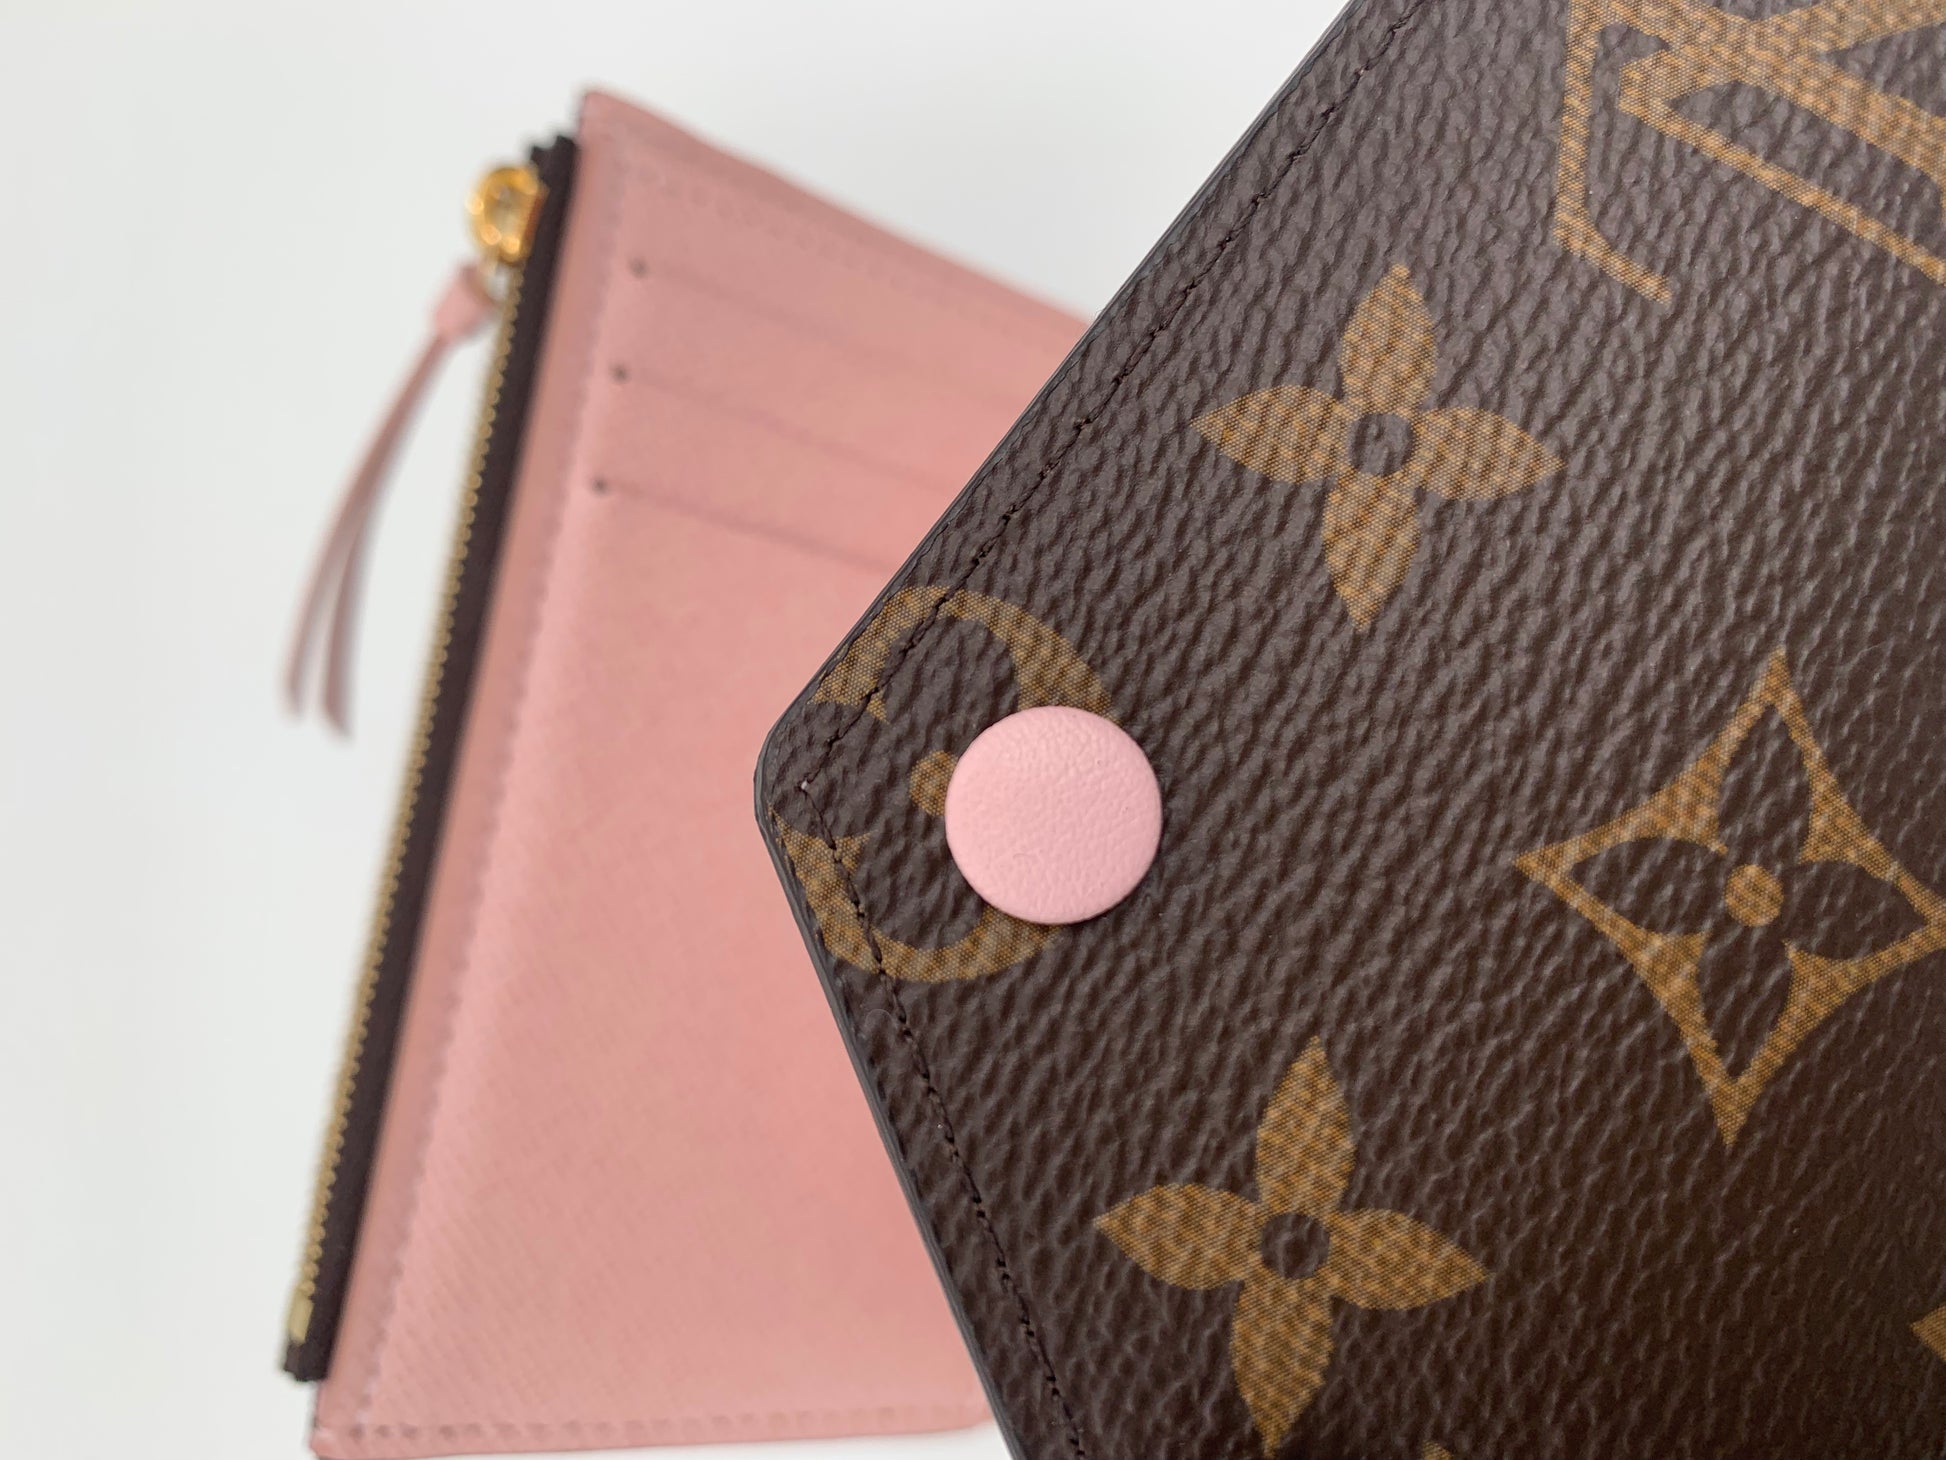 Louis Vuitton Wallet Victorine Monogram Brown